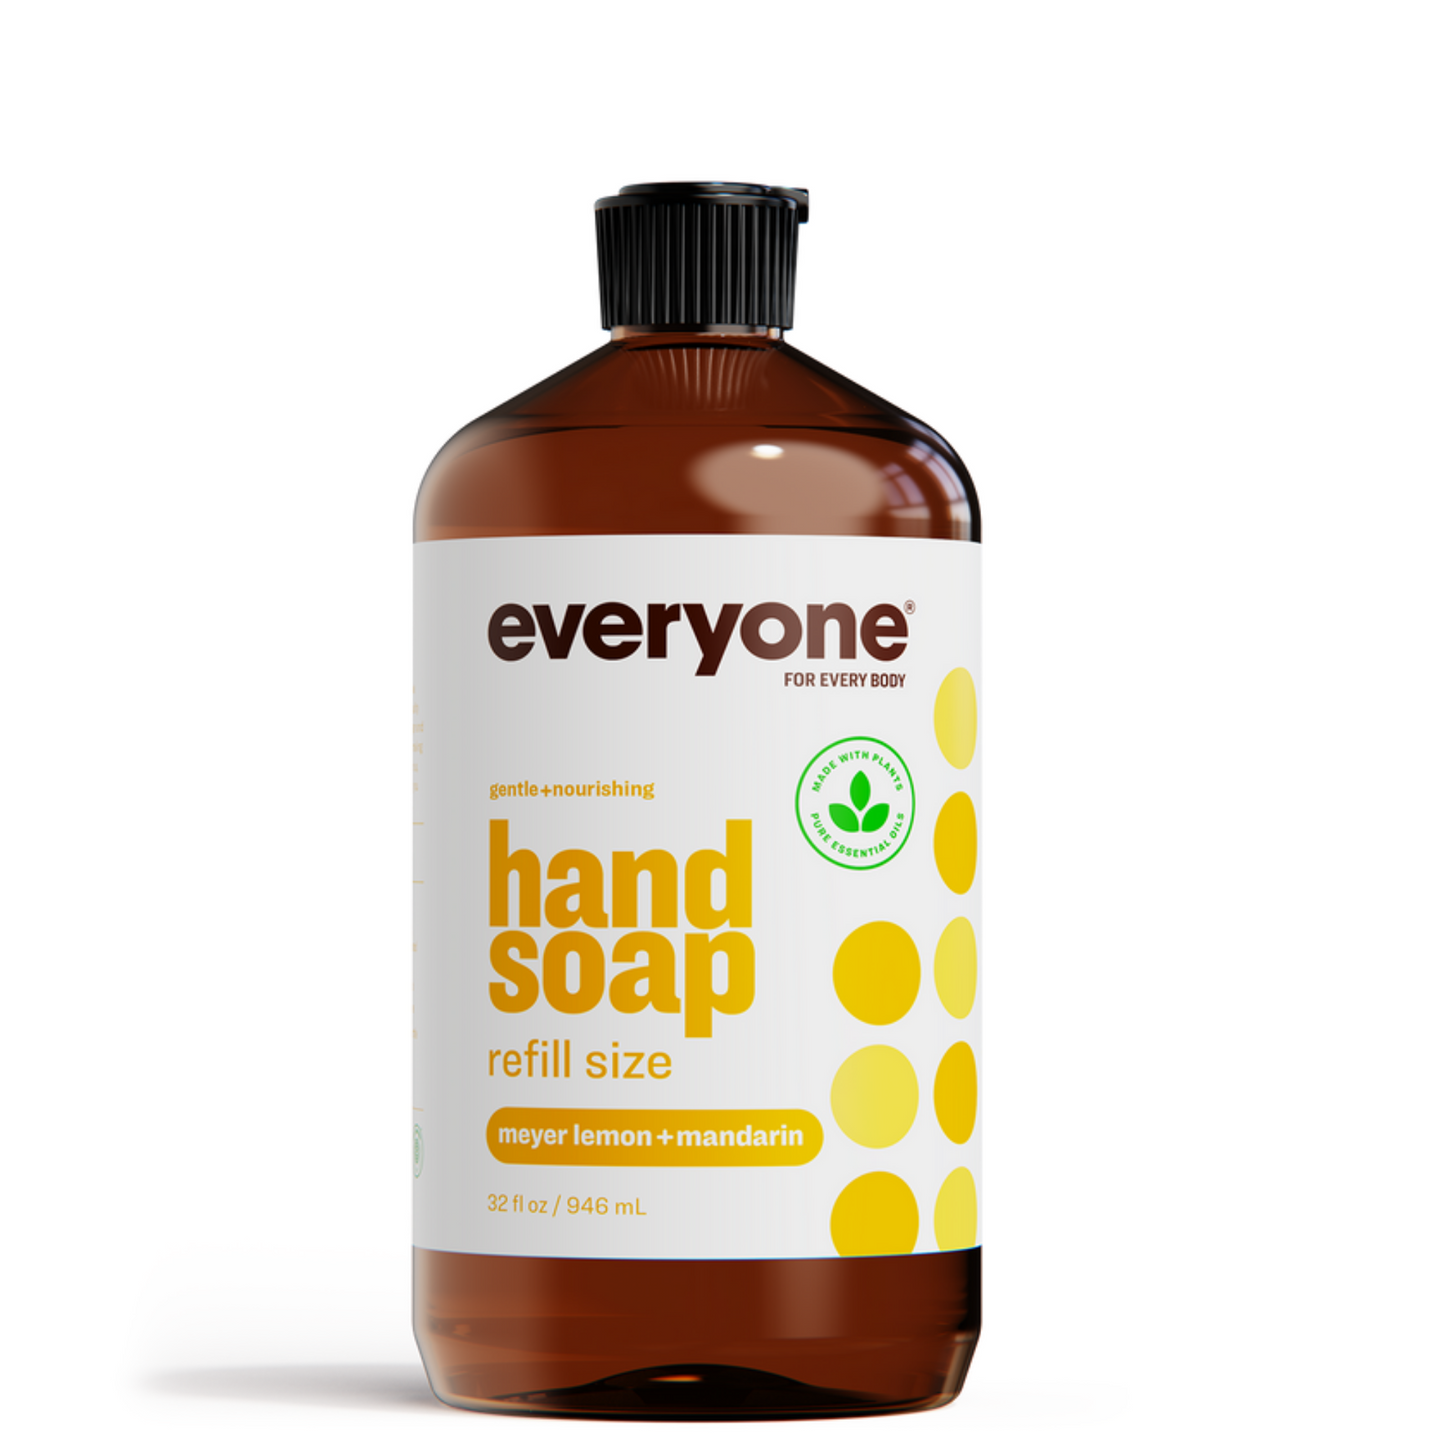 Primary Image of Meyer Lemon + Mandarin Everyone Hand Soap Refill